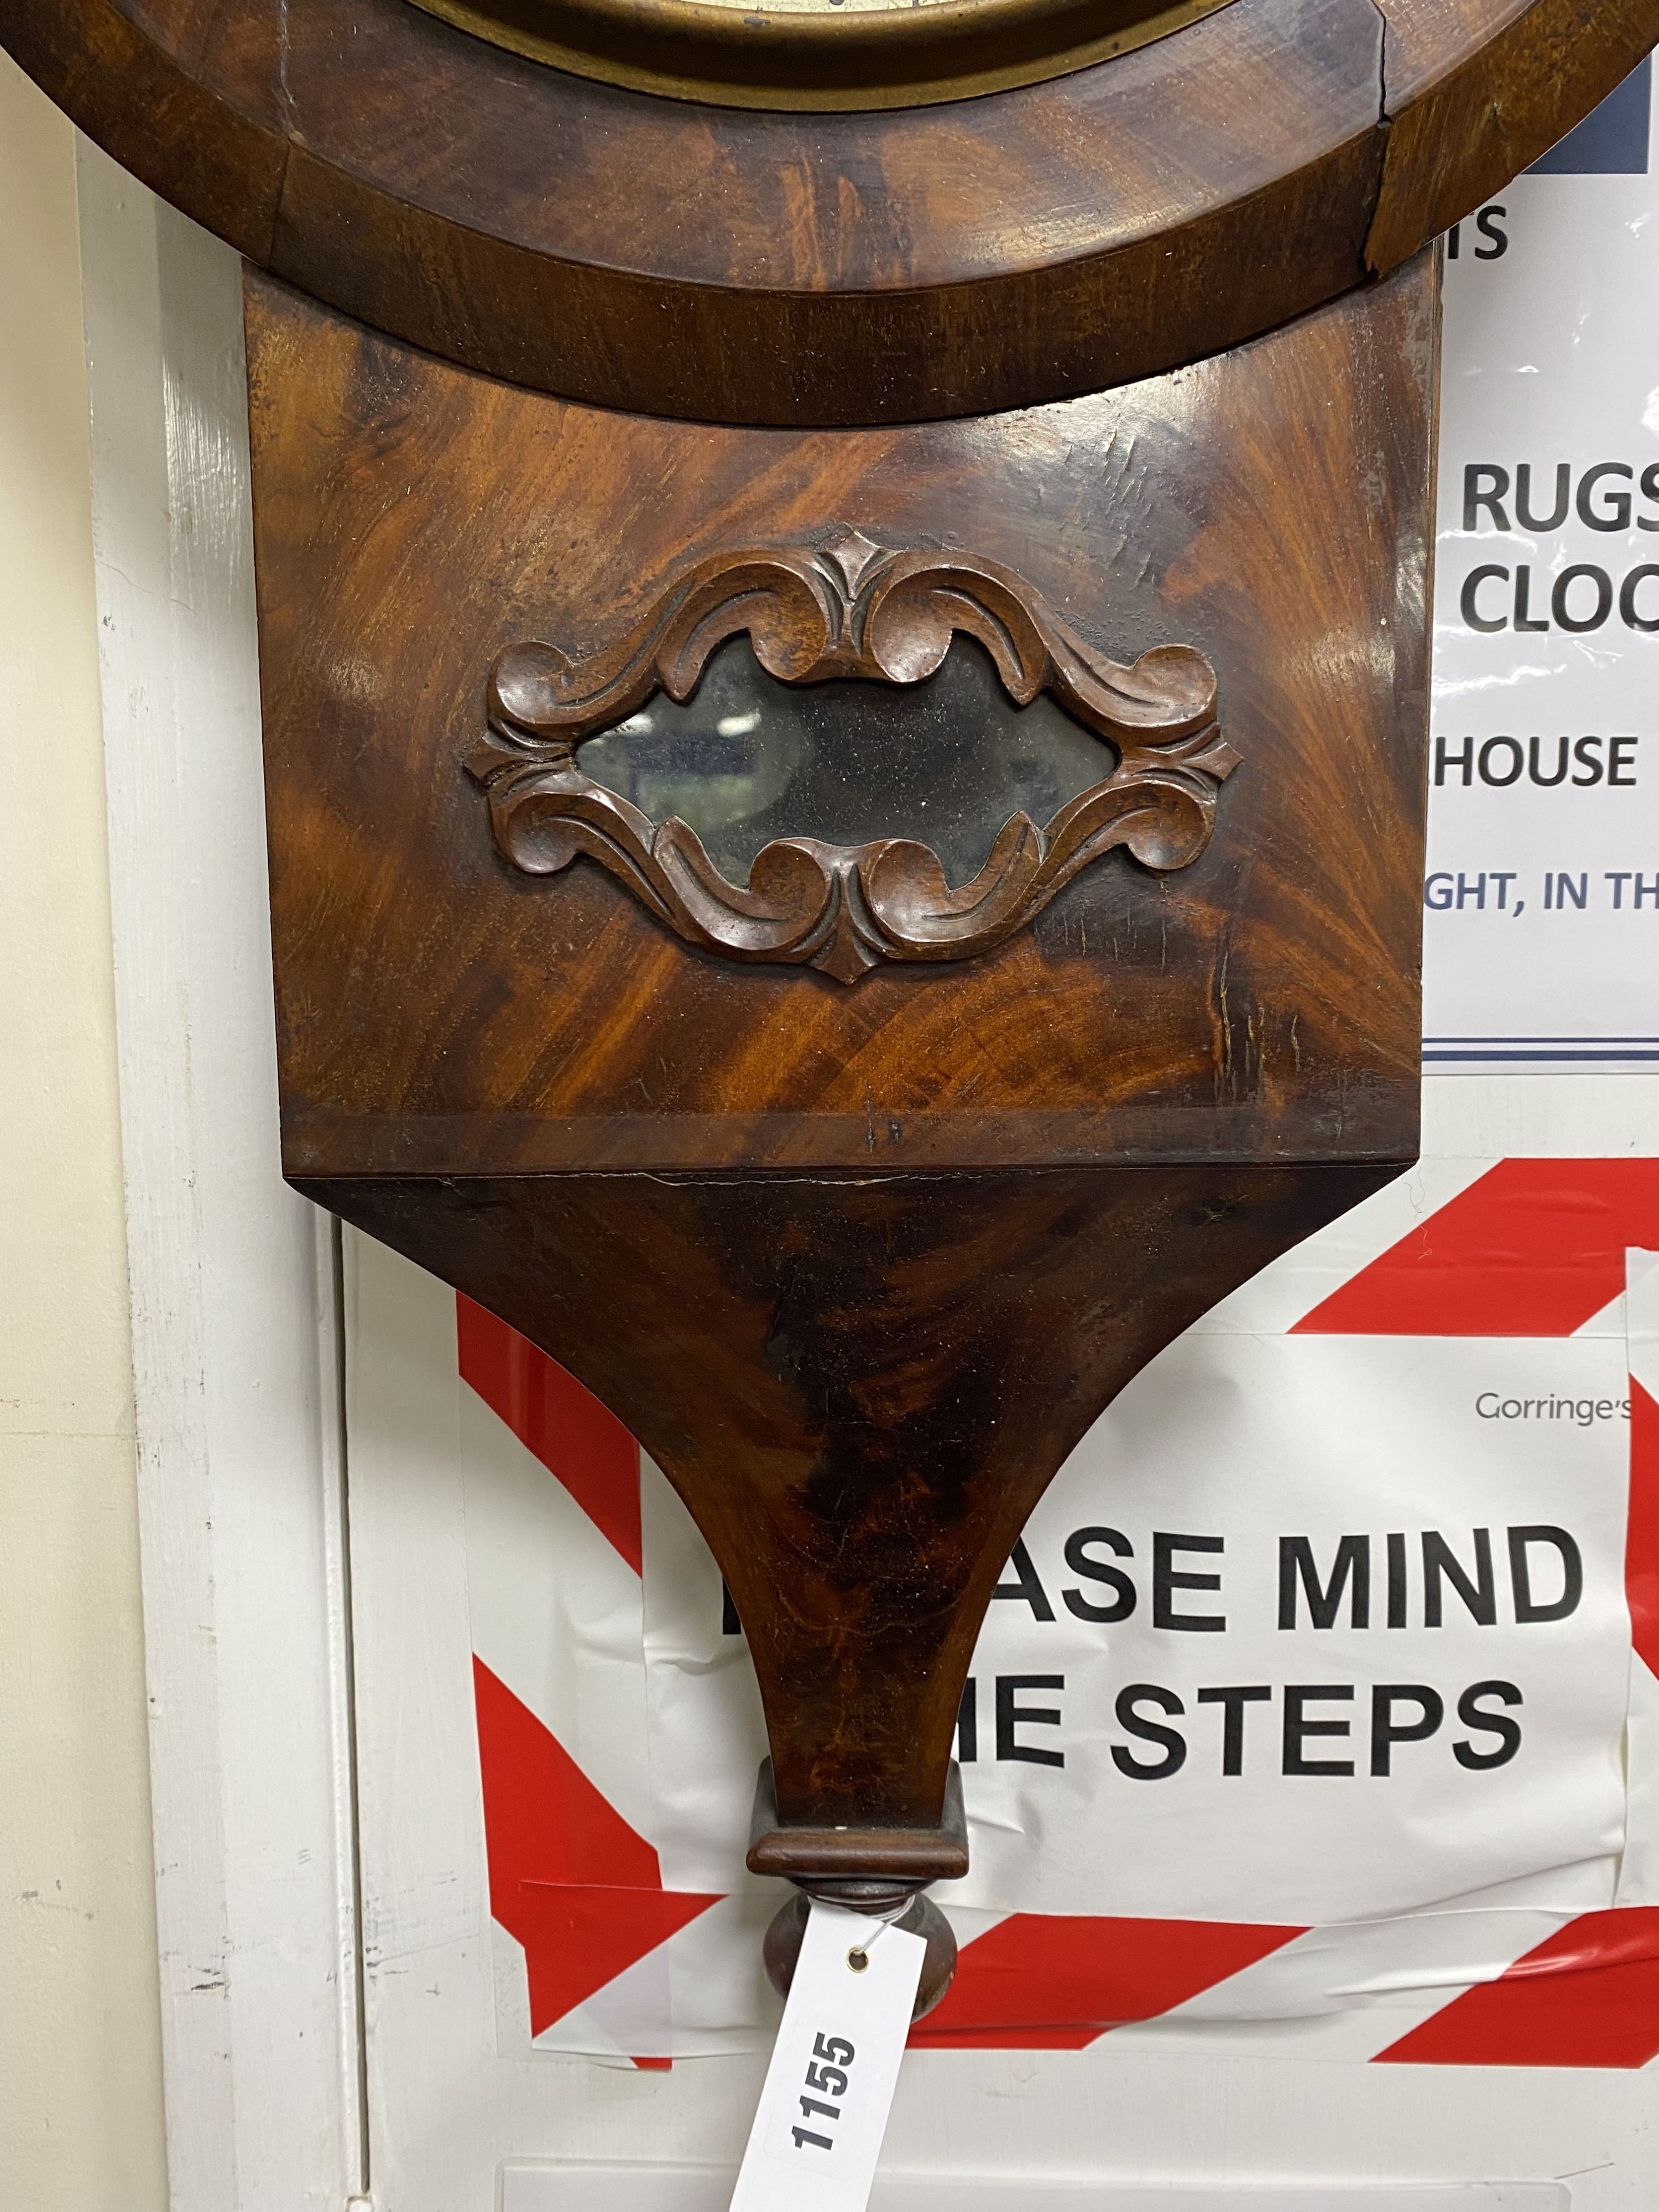 A Regency mahogany eight day drop dial wall clock, height 80cm